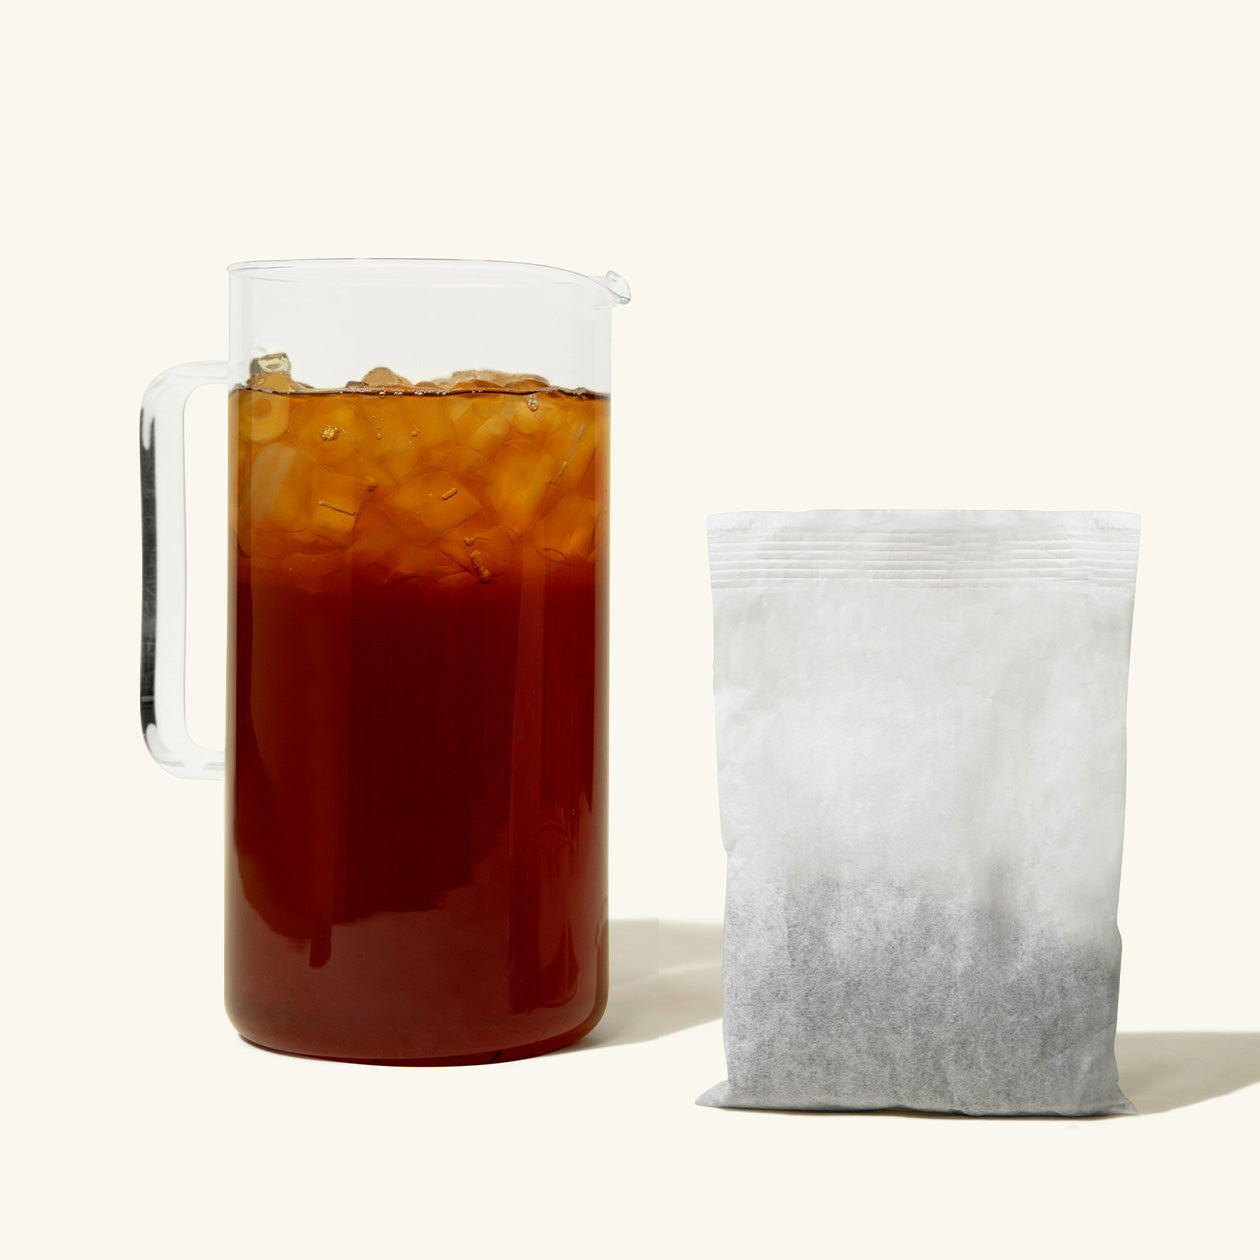 A pitcher of Numi High Mountain Black Iced Tea with a gallon iced tea pouch